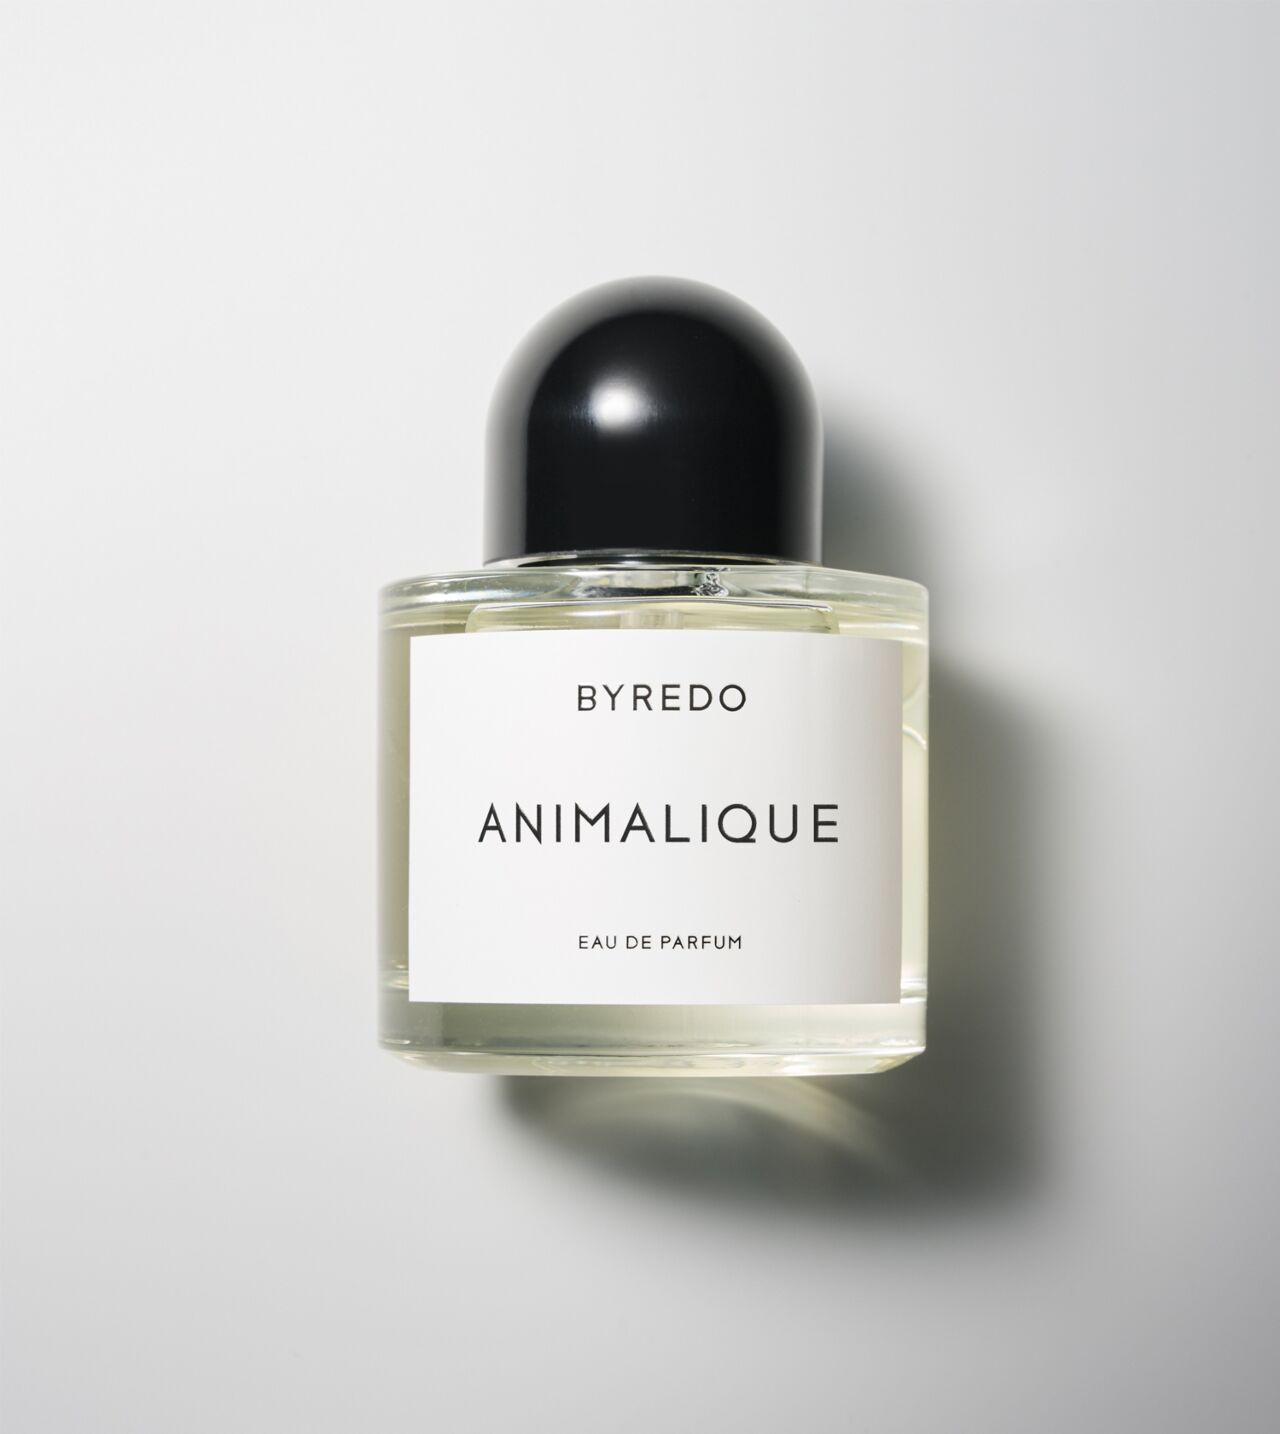 FREE Sample of Byredo Animalique Eau De Parfum